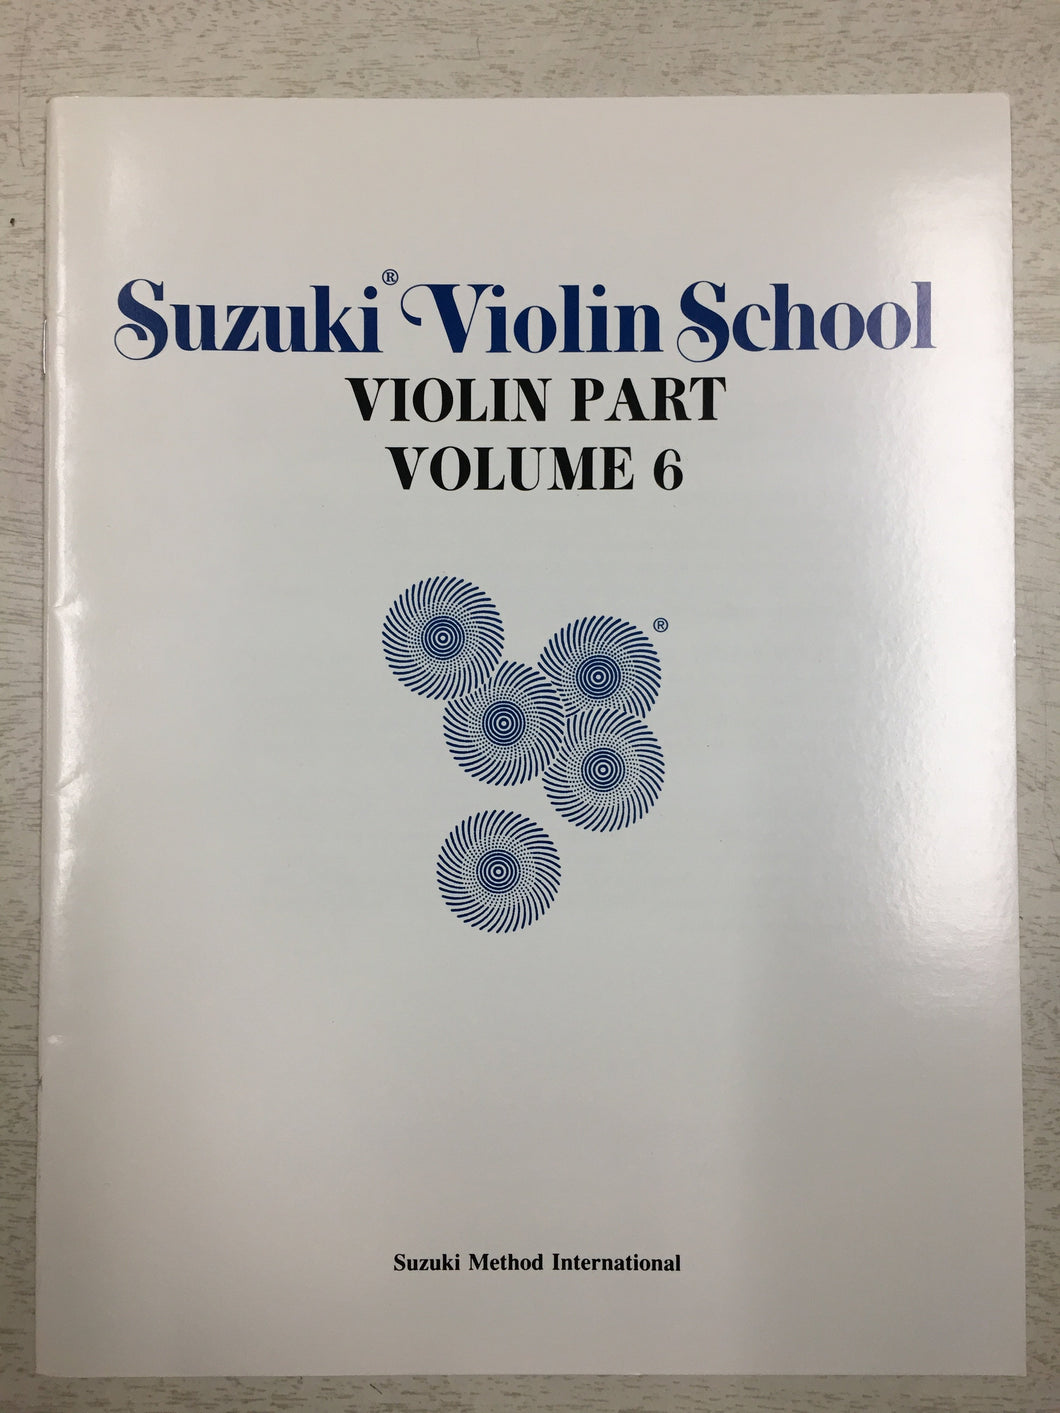 Suzuki Violin School, Volume 6: Violin Part